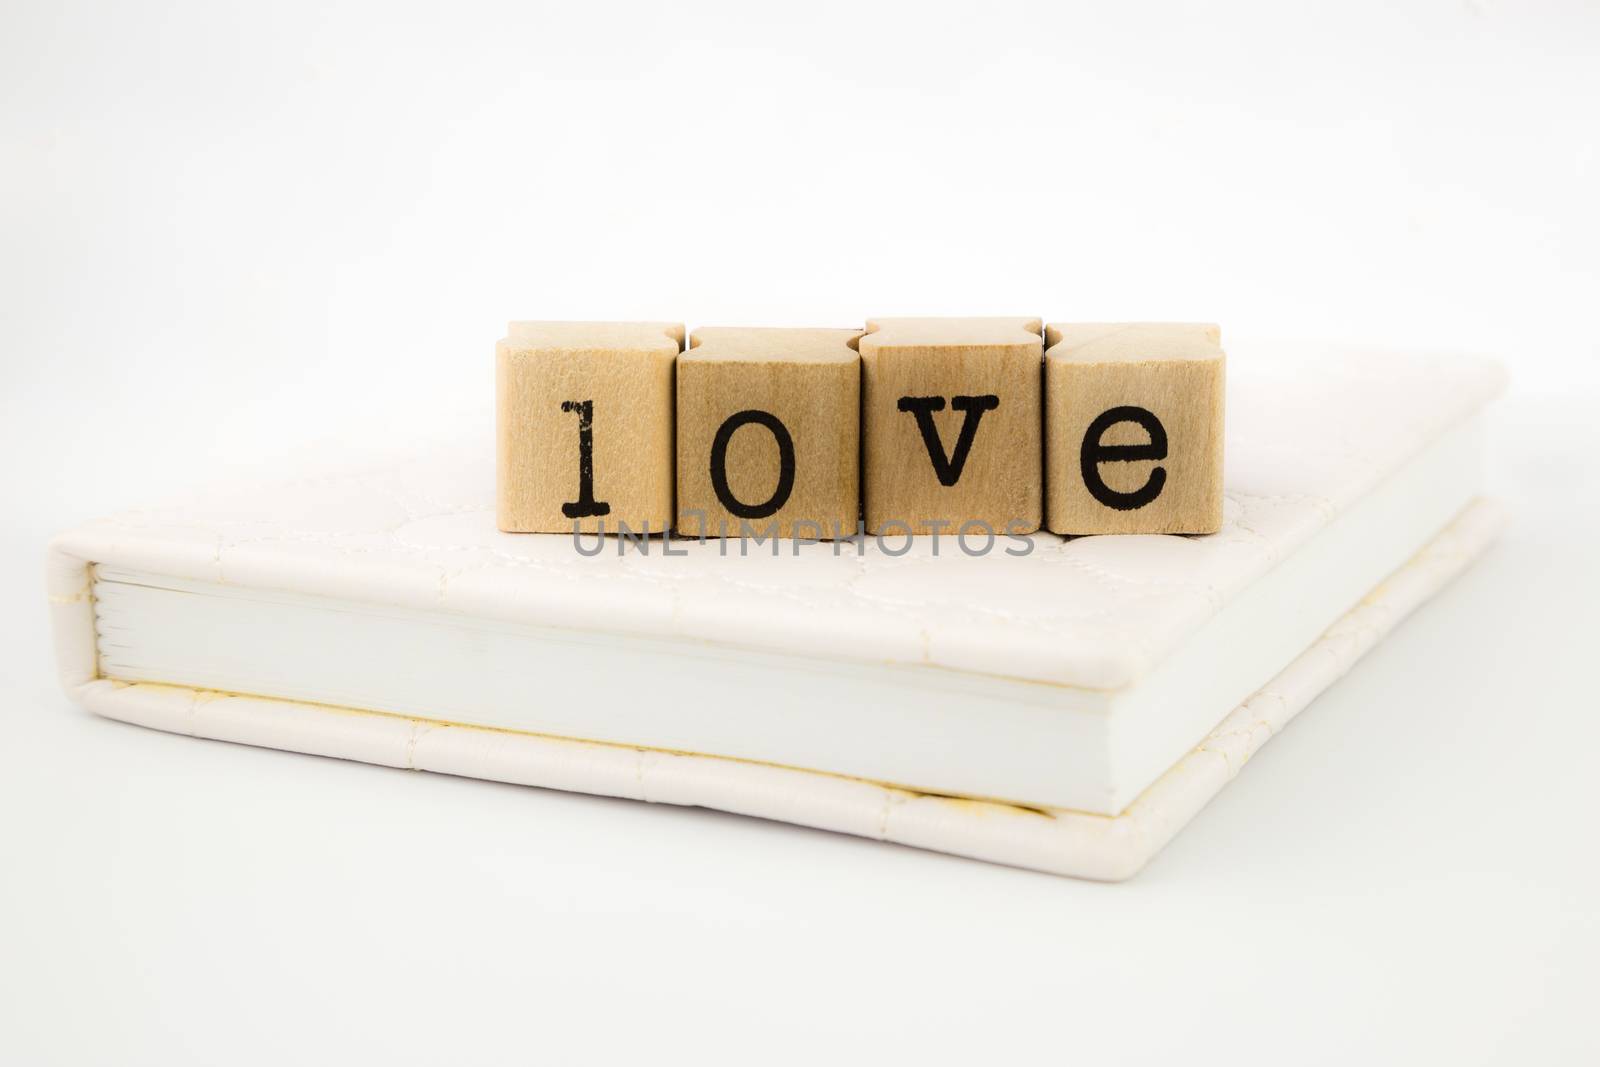 love wording stack on a book by vinnstock